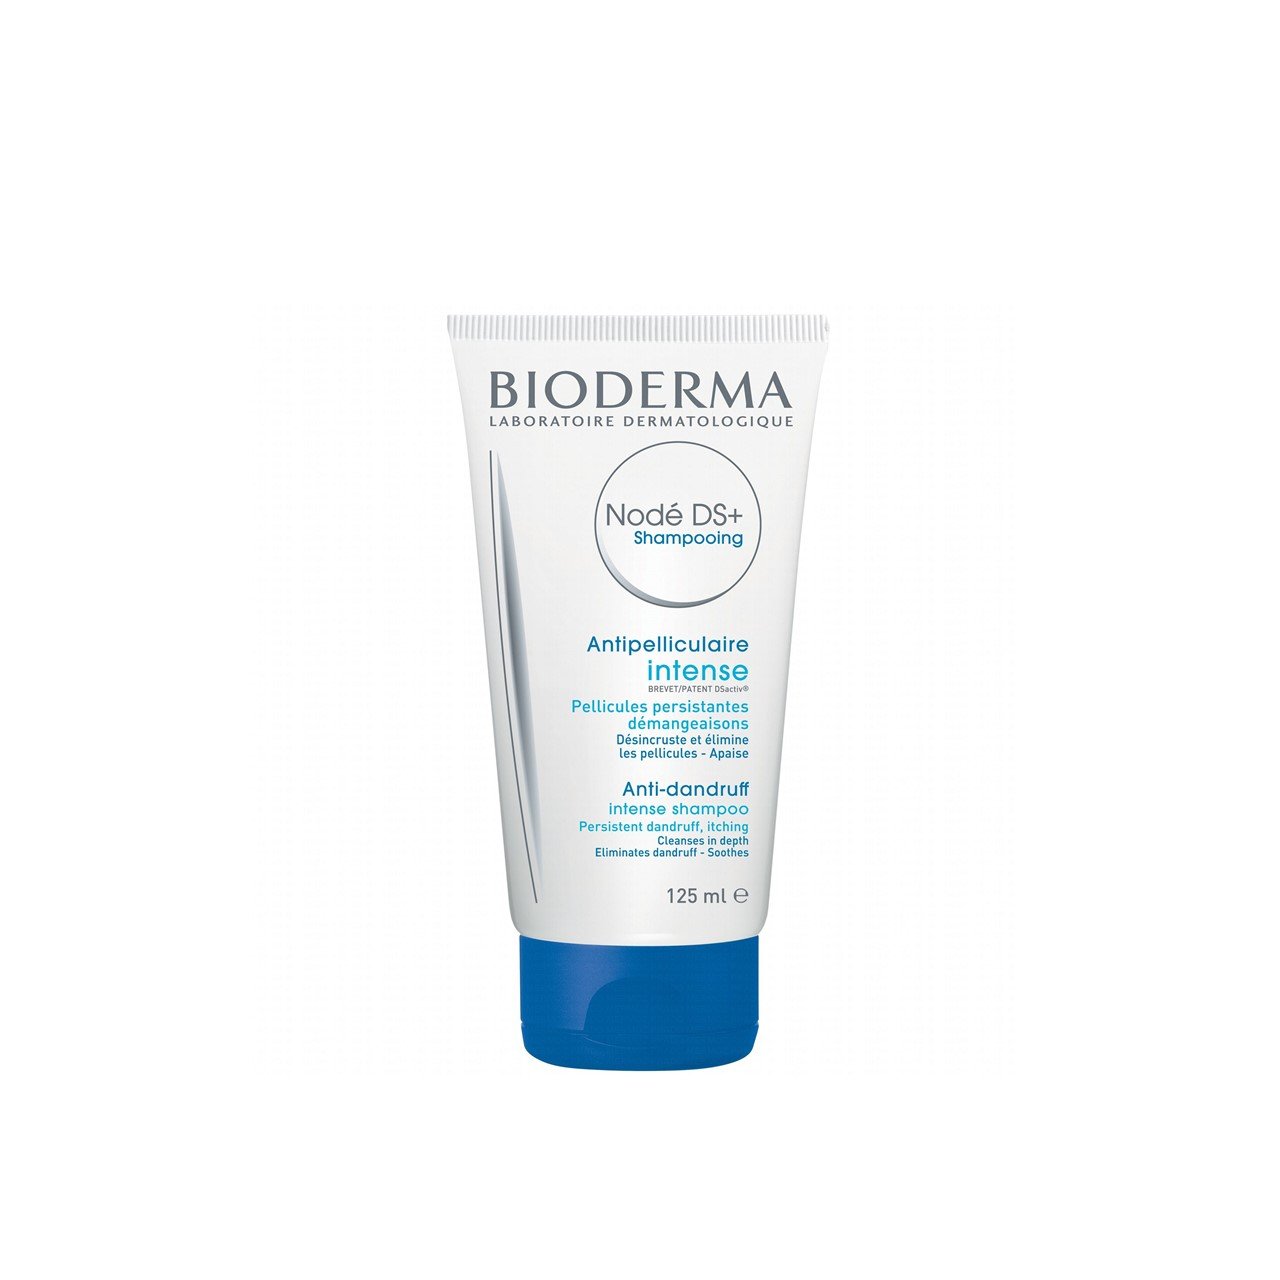 Bioderma Nodé DS+ Shampooing Anti-Dandruff Intense Shampoo 125ml (4.23fl oz)